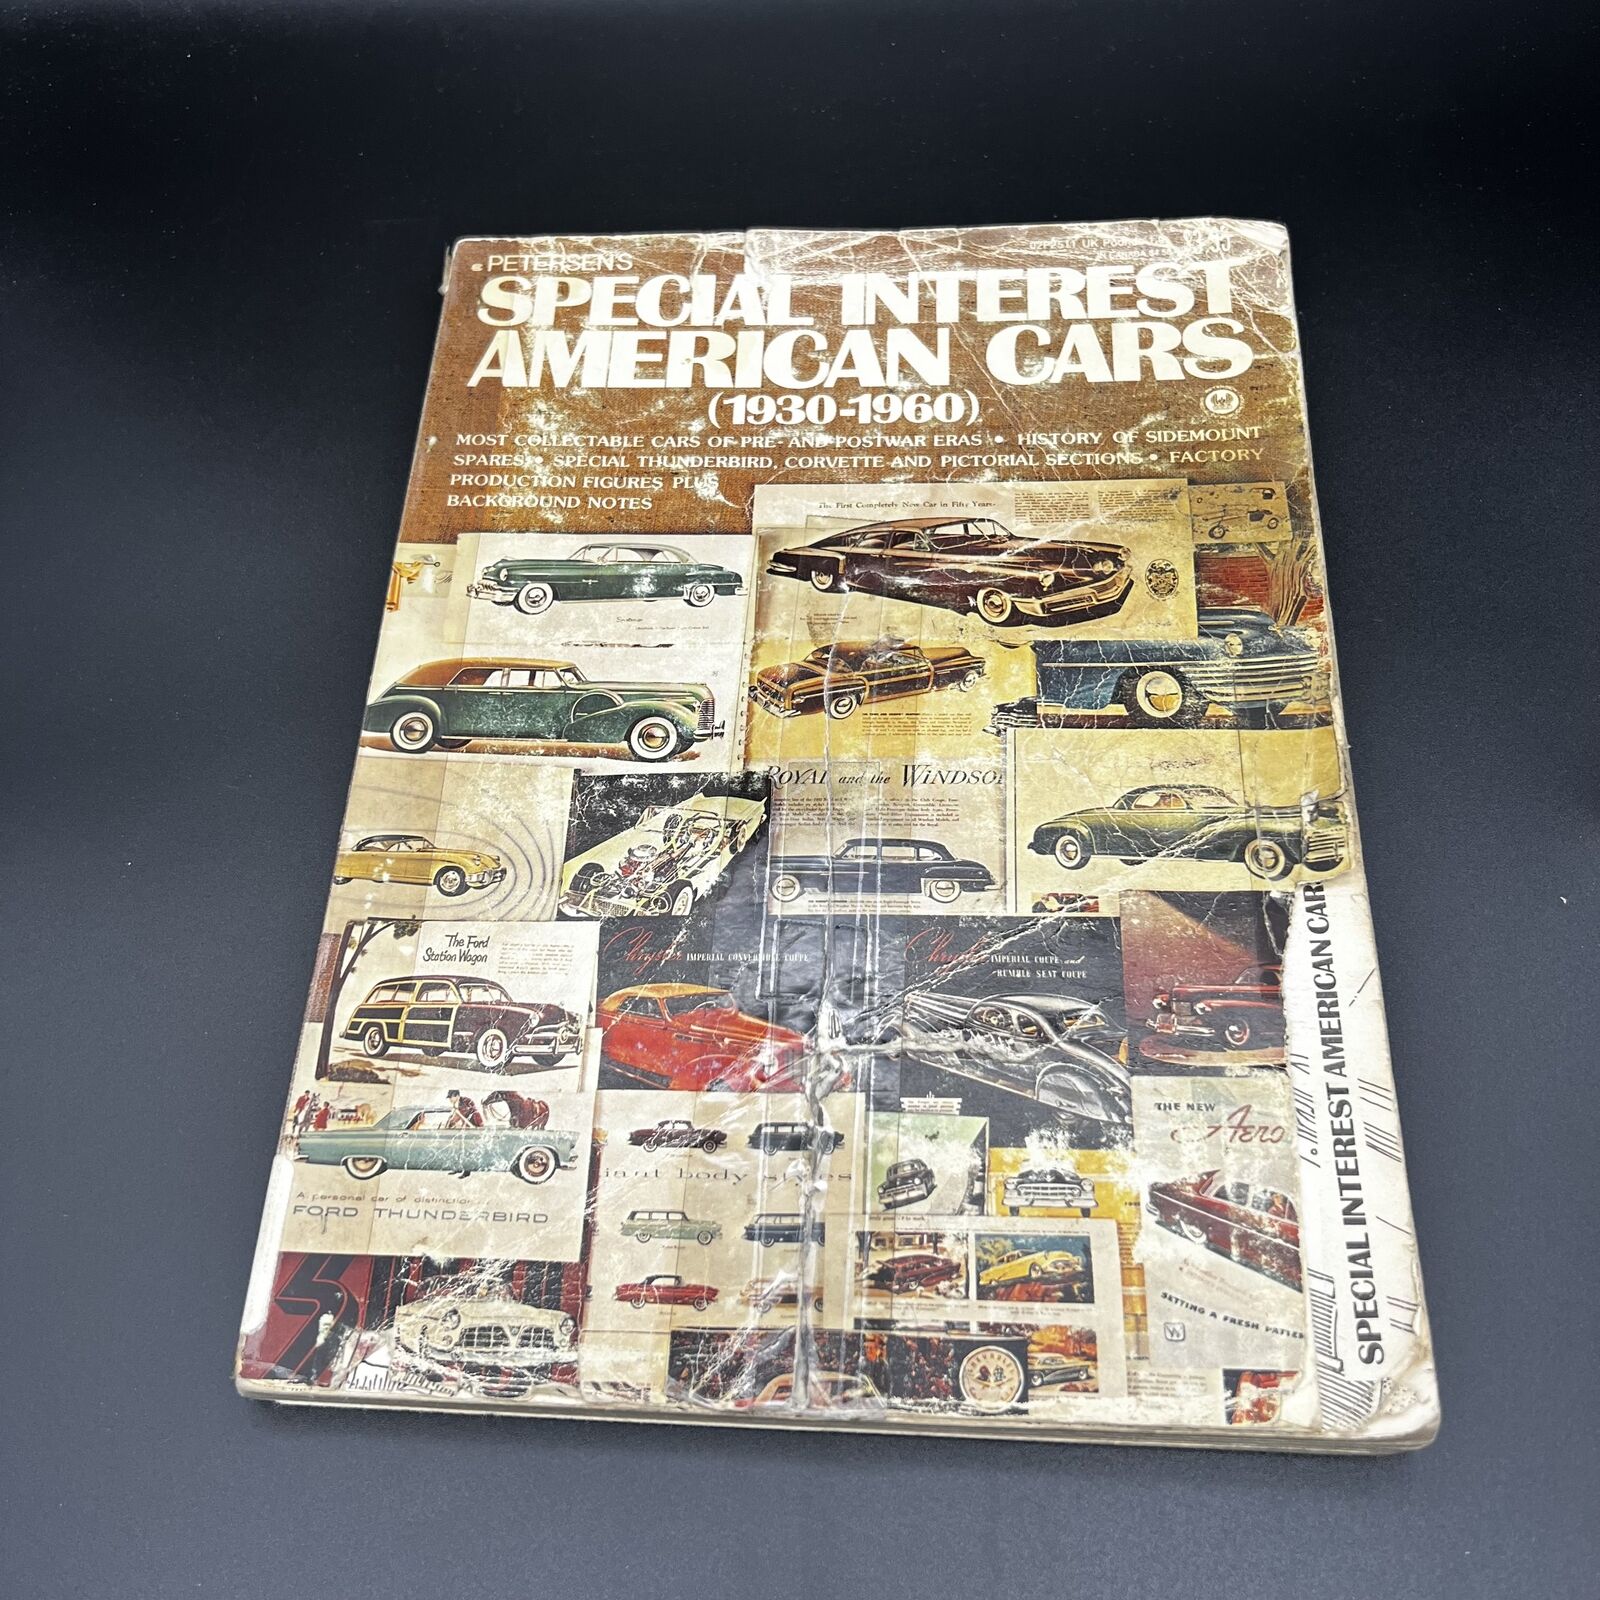 Petersen's Special Interest American Cars (1930-1960) Magazine Vintage